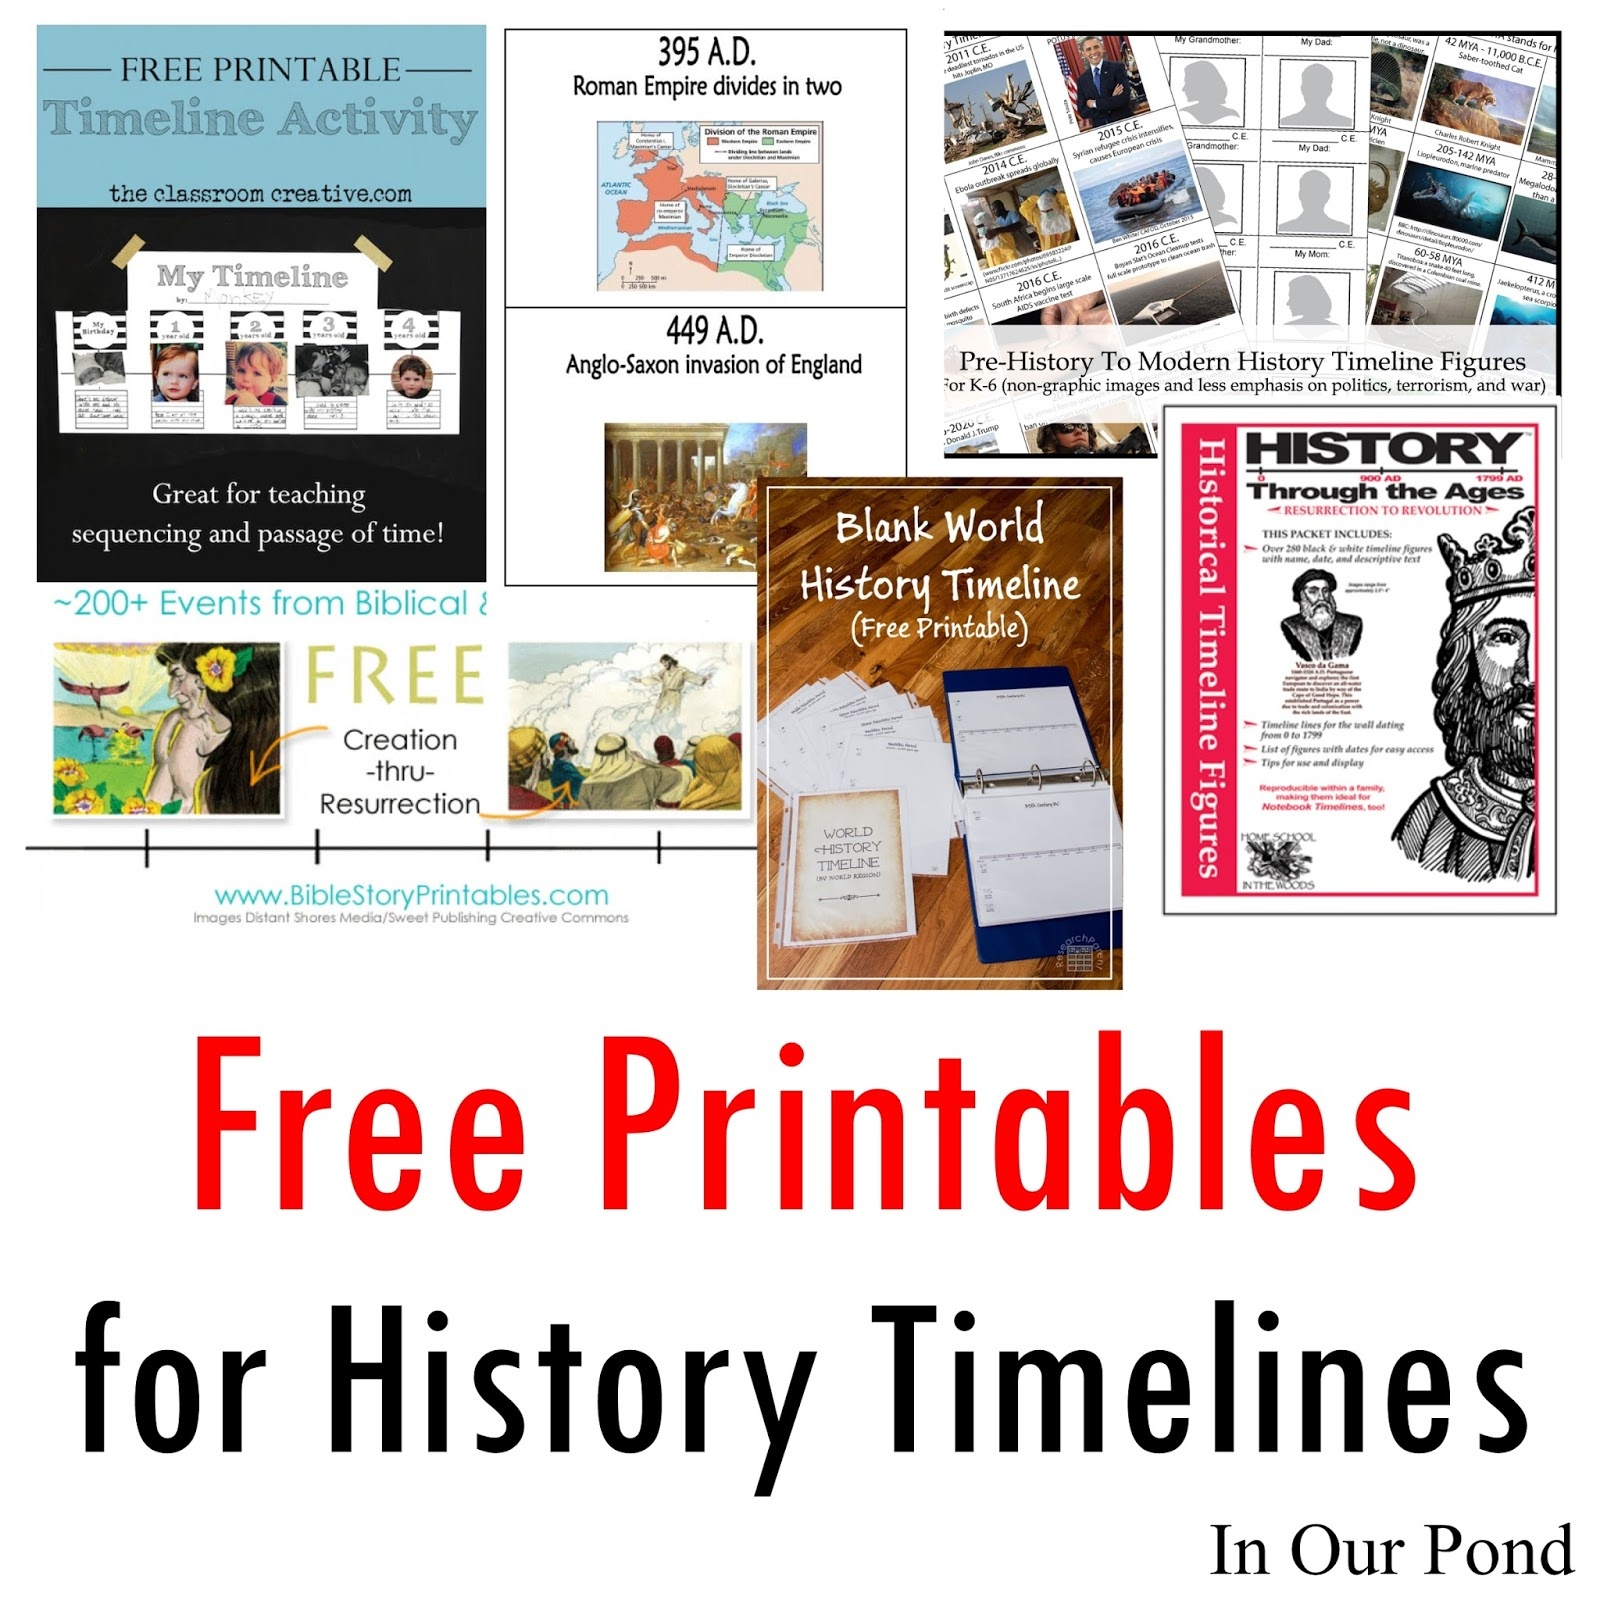 Free Printables For History Timelines - Free Printable Timeline Figures